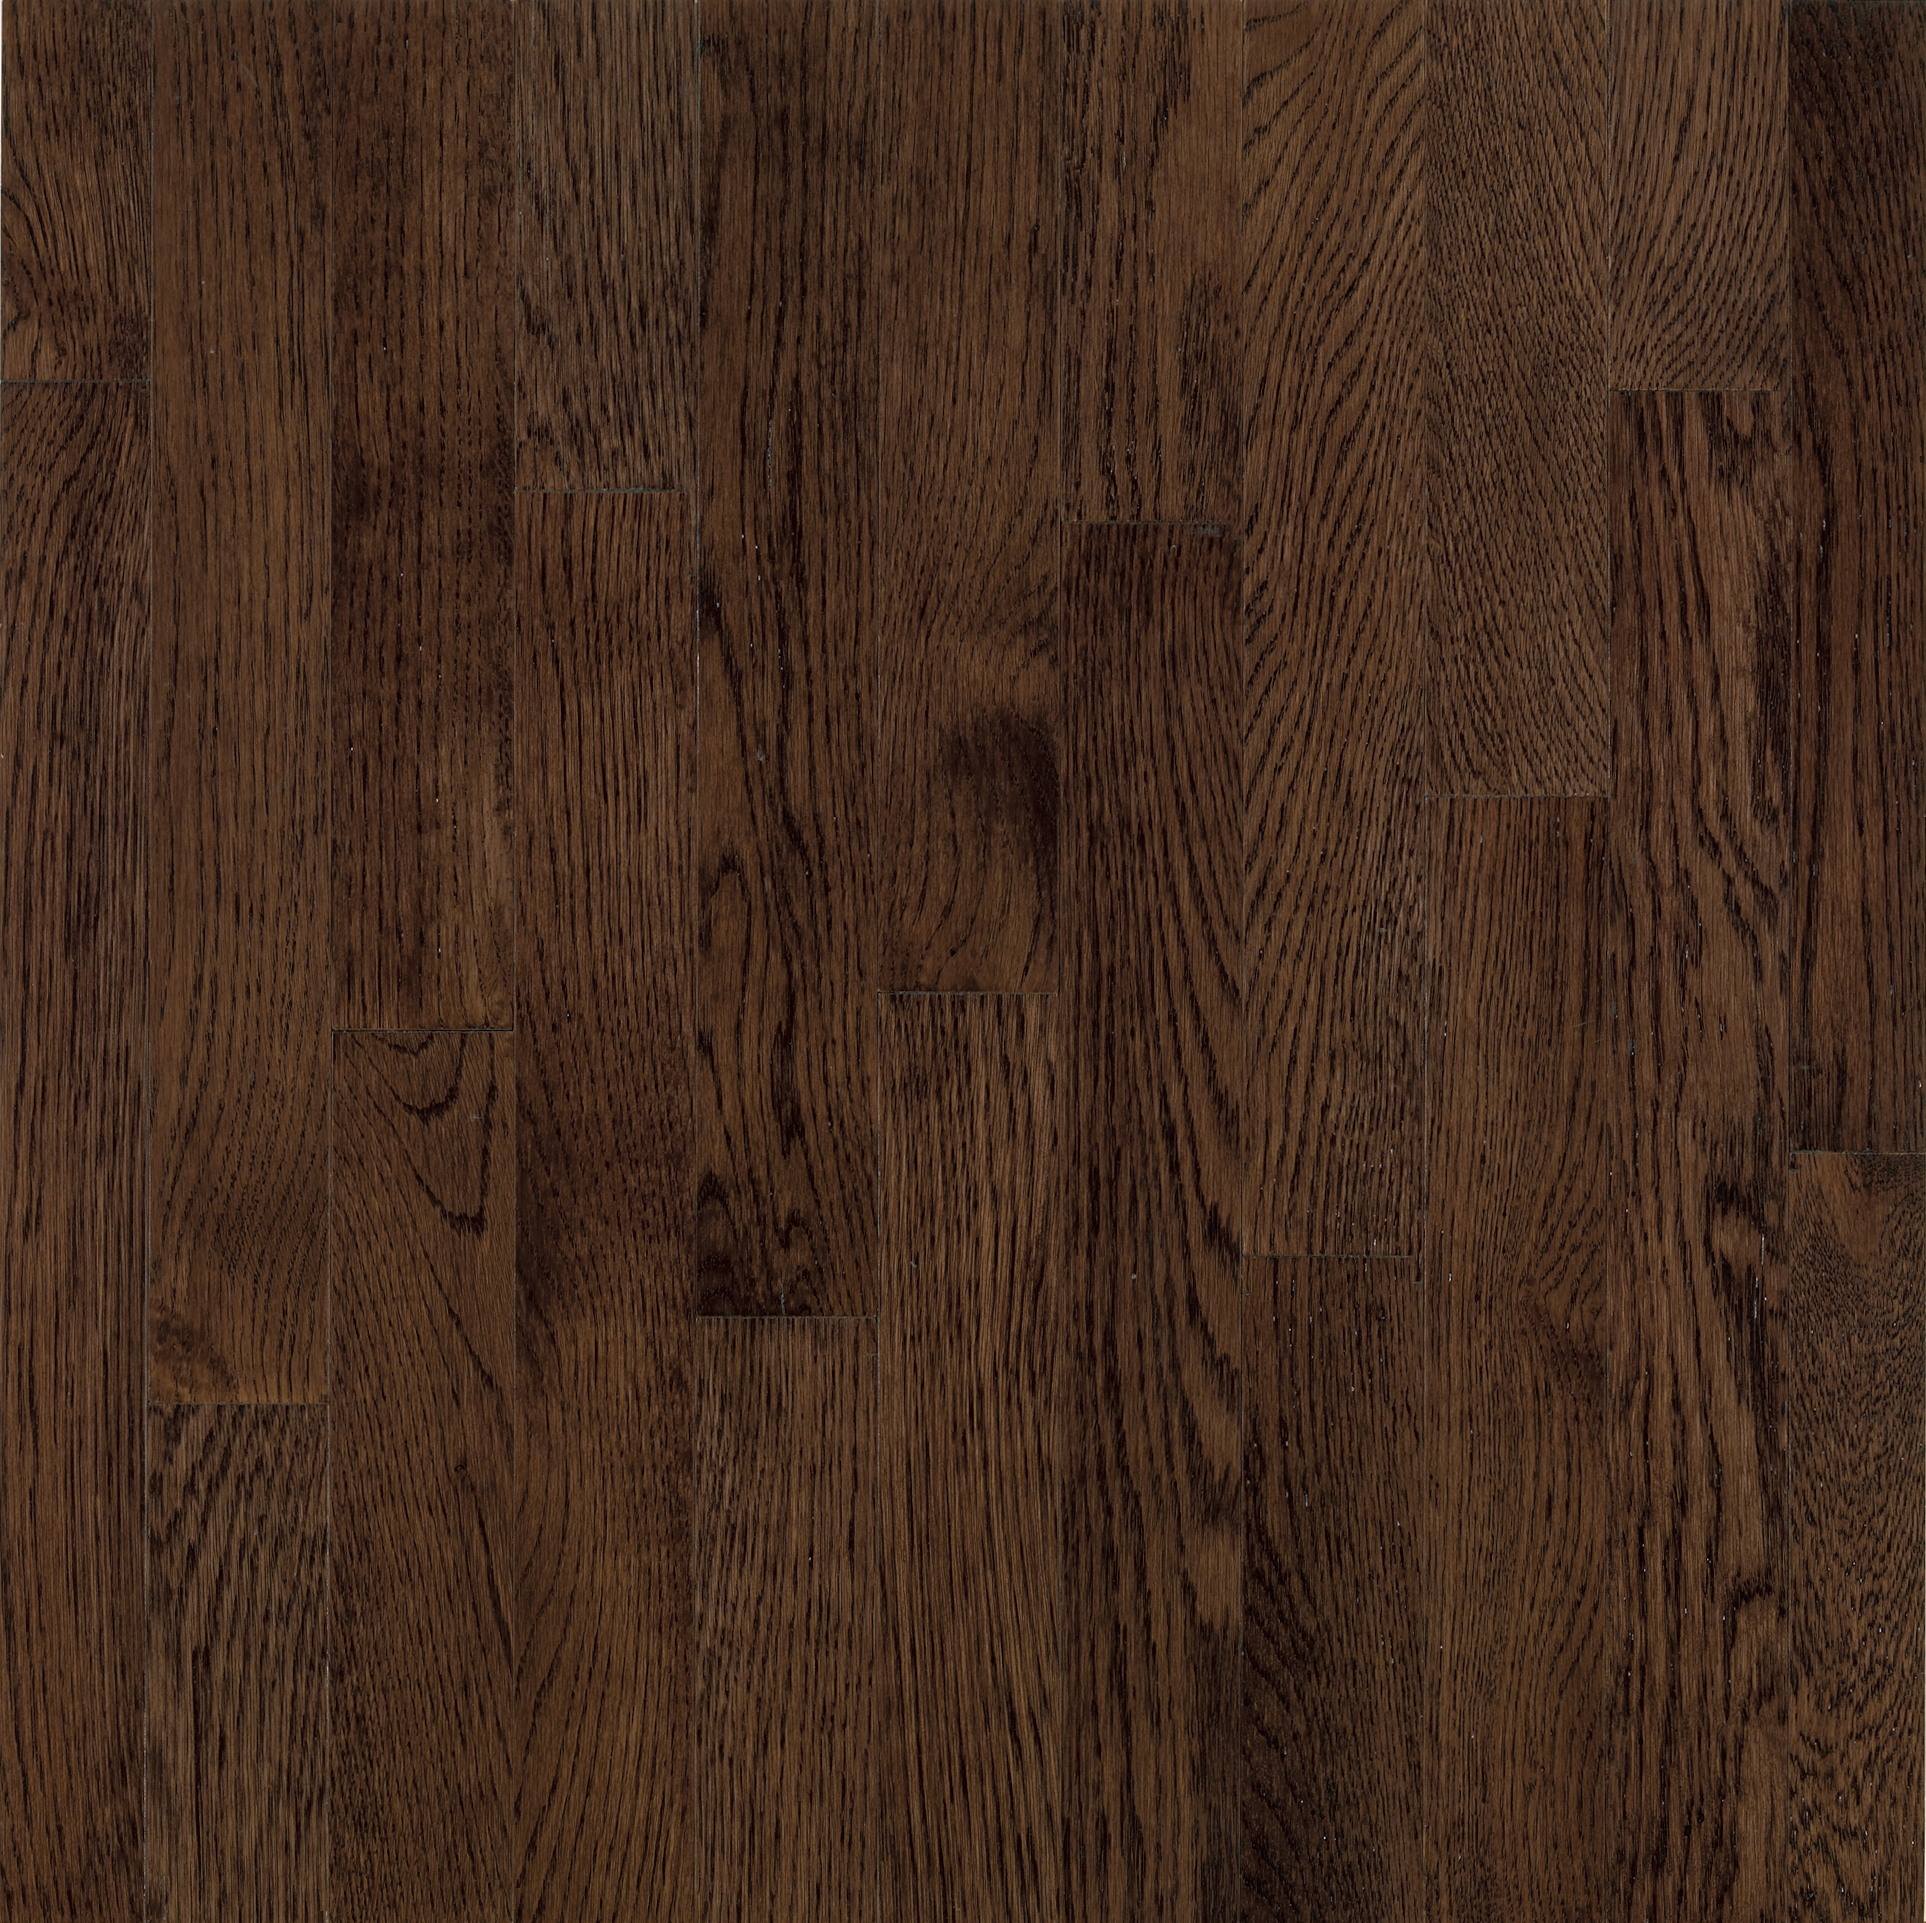 Oak Solid Hardwood Cb1277, Bruce 3 4 Inch Hardwood Flooring